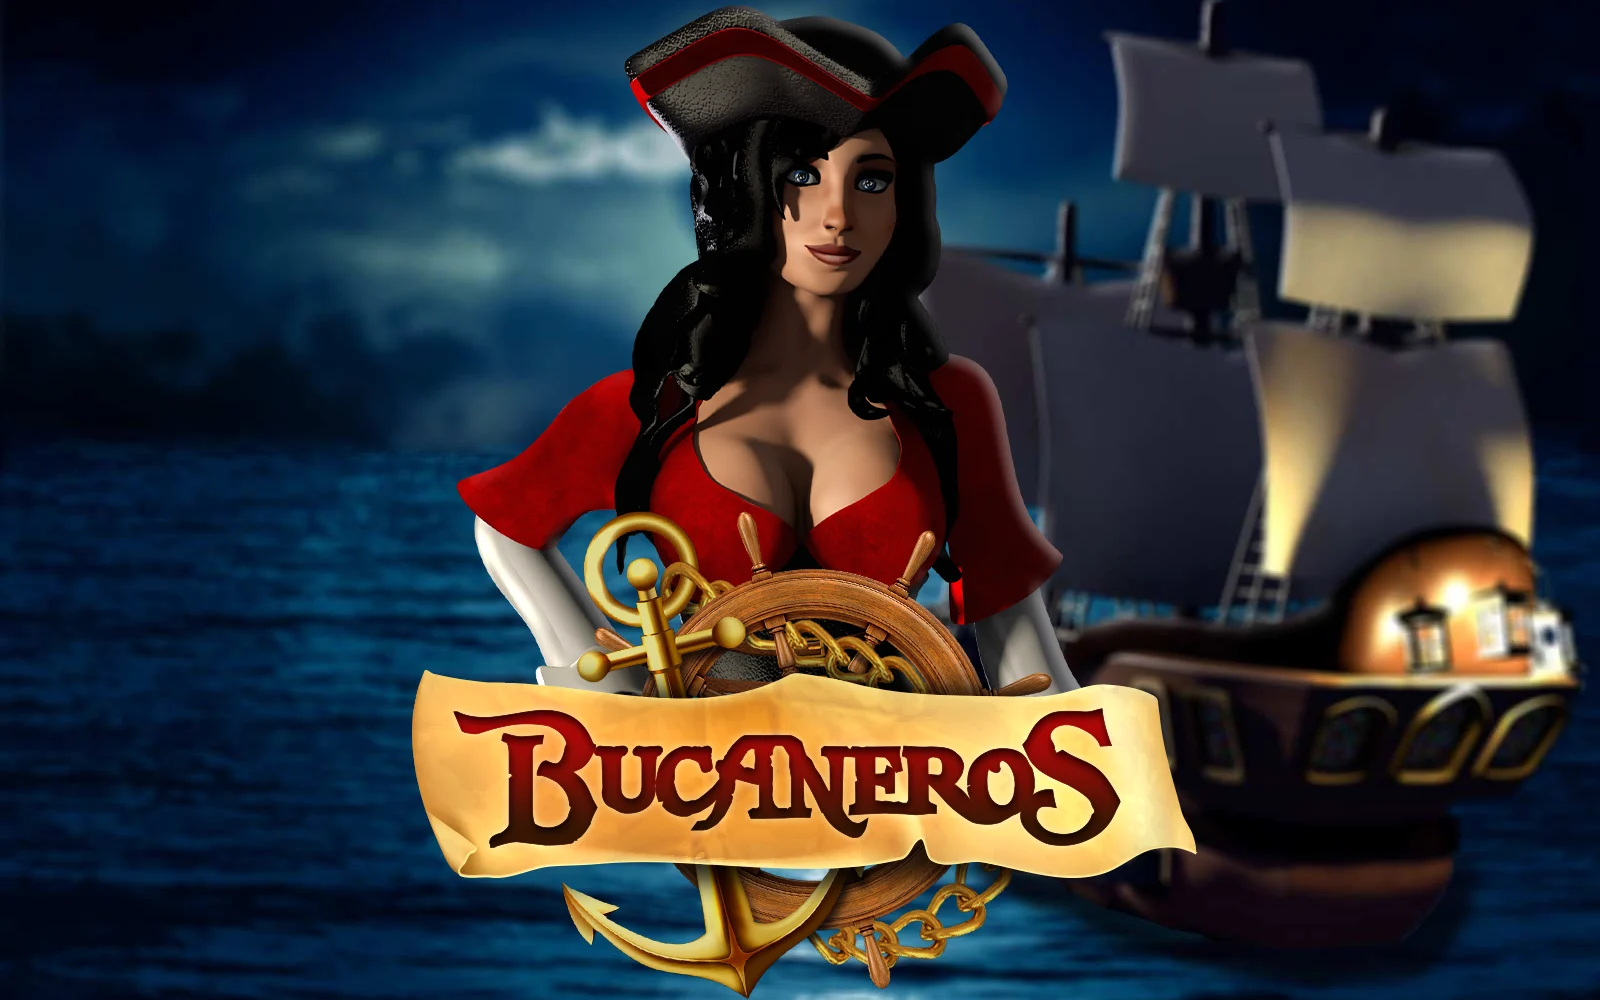 Play Bucaneros on Starcasino.be online casino